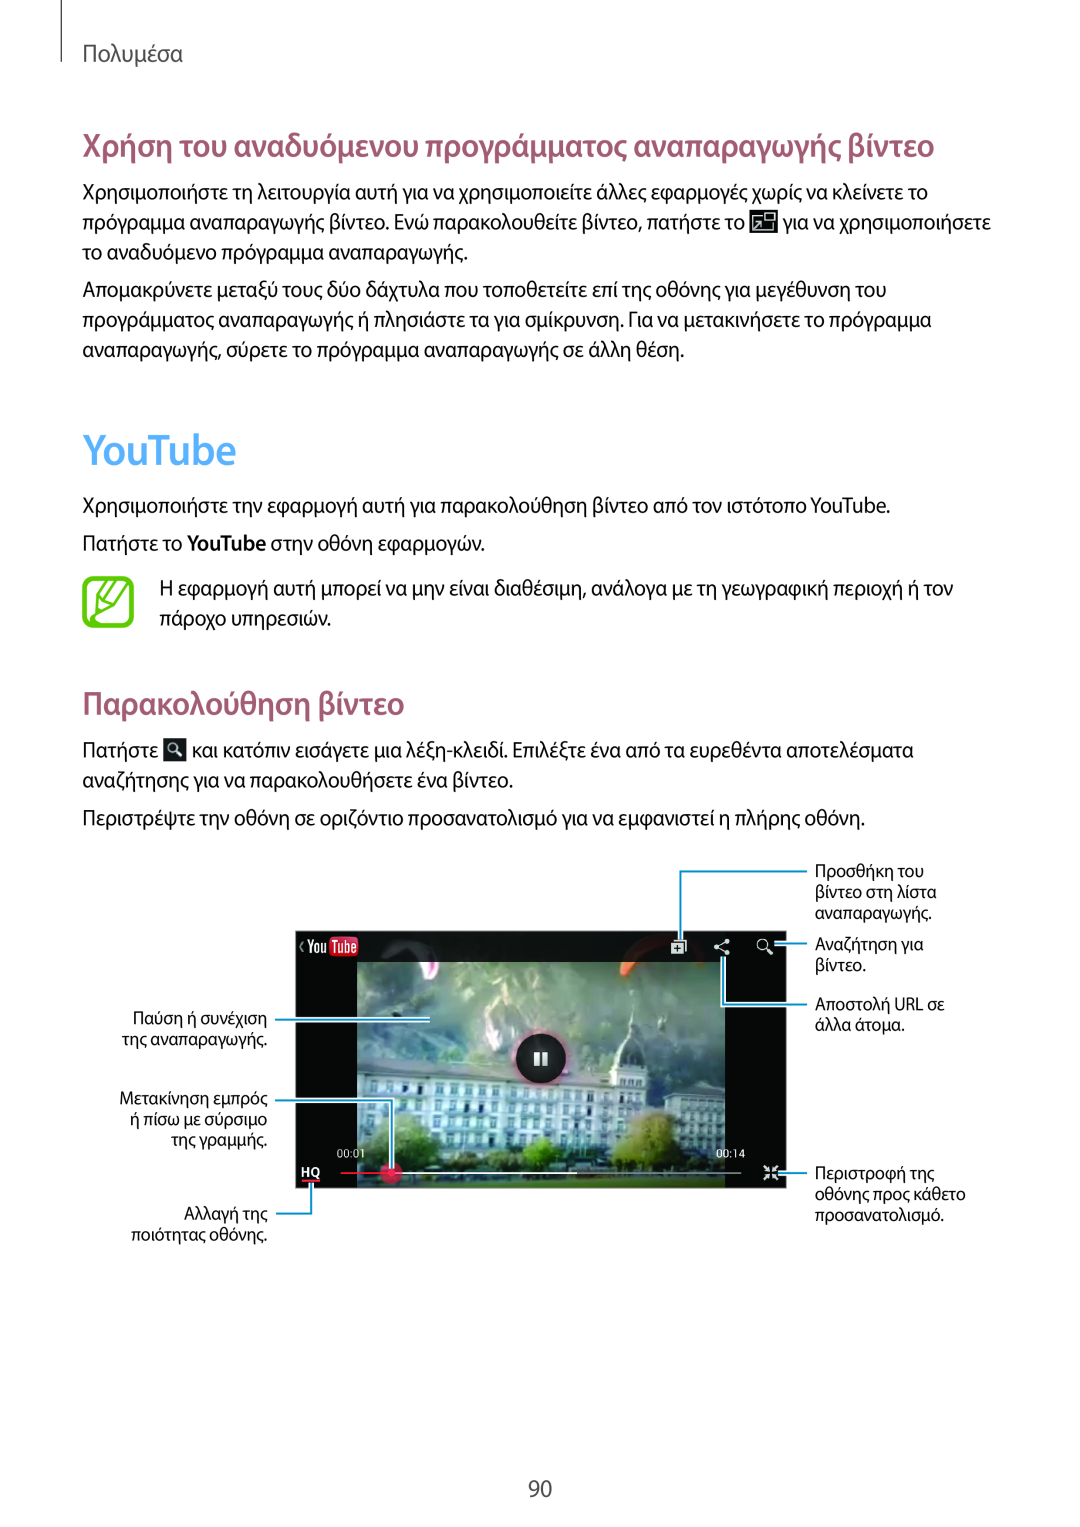 Samsung GT-N7100VSDEUR YouTube, Παρακολούθηση βίντεο, Χρήση του αναδυόμενου προγράμματος αναπαραγωγής βίντεο, Πολυμέσα 